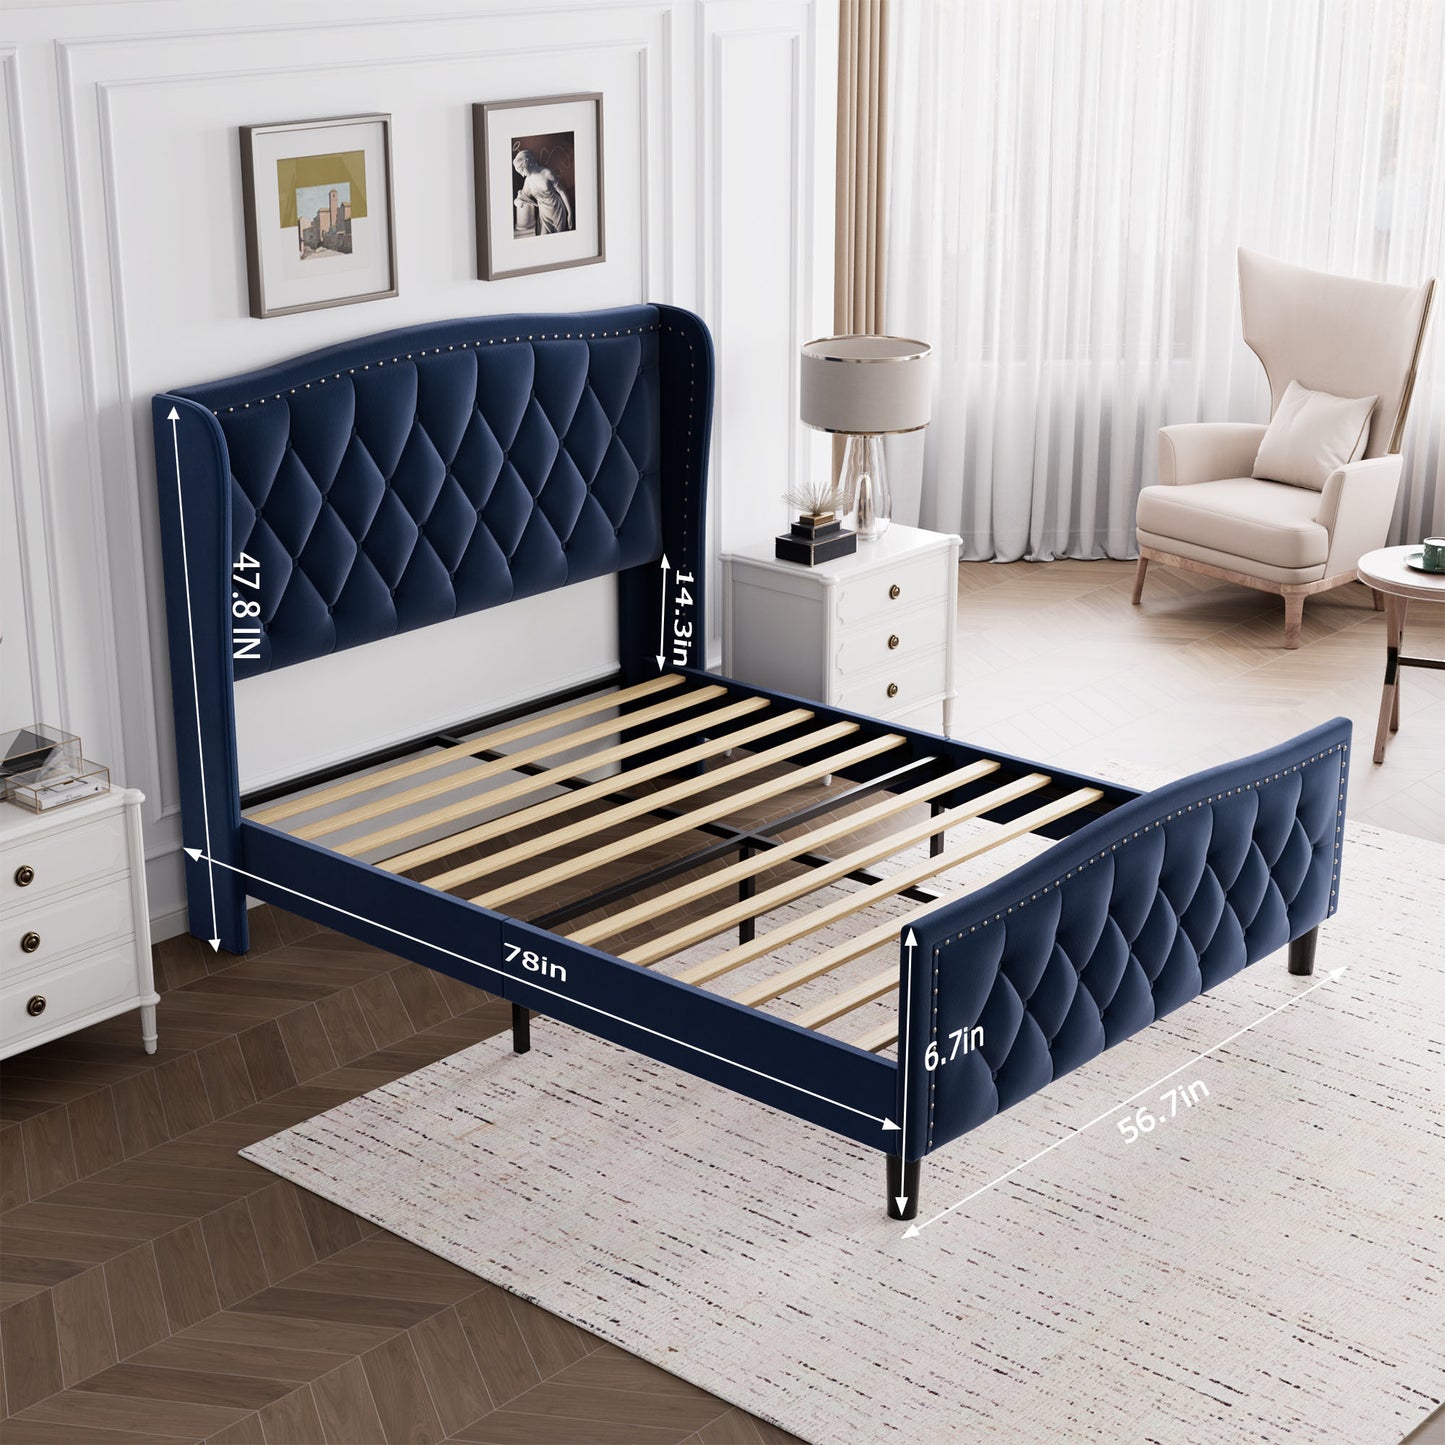 velvet upholstered platform bed with wingback headboard, blue